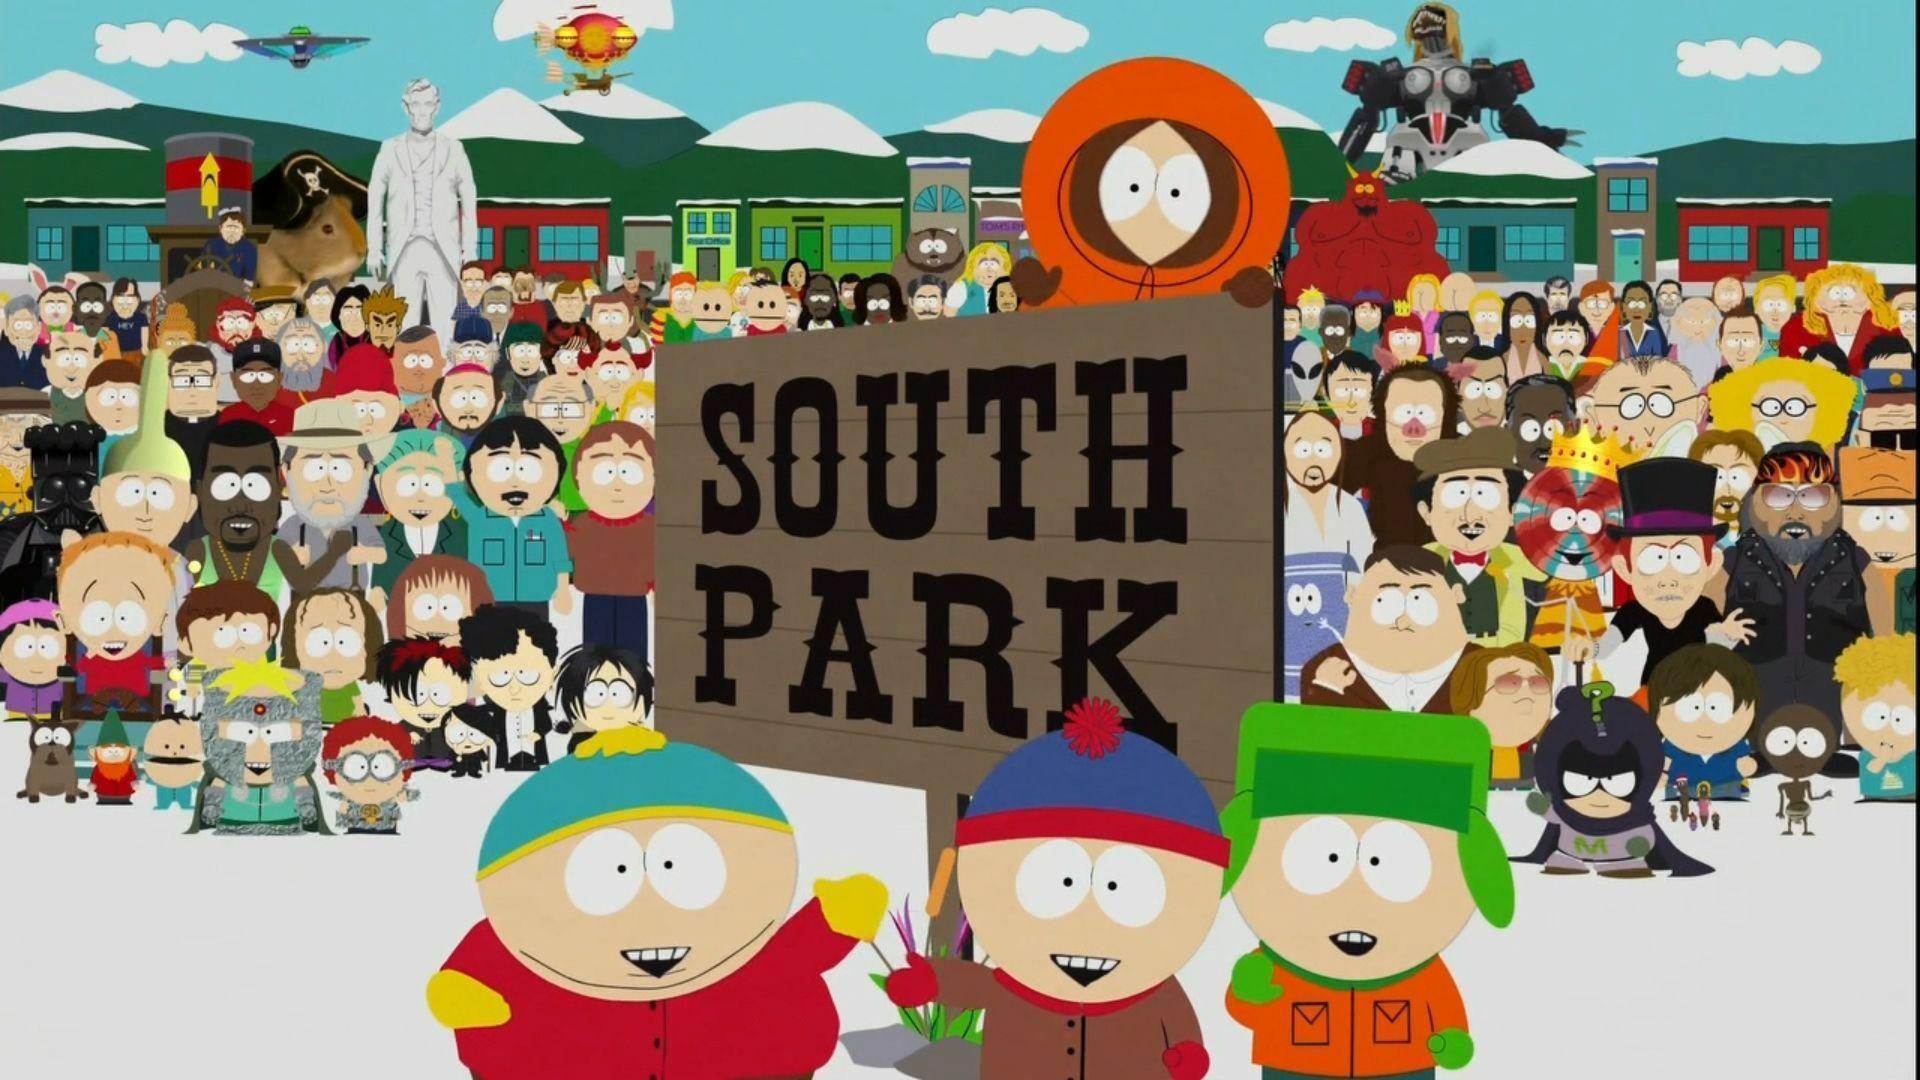 South Park 7 Definition, Widescreen Wallpaper